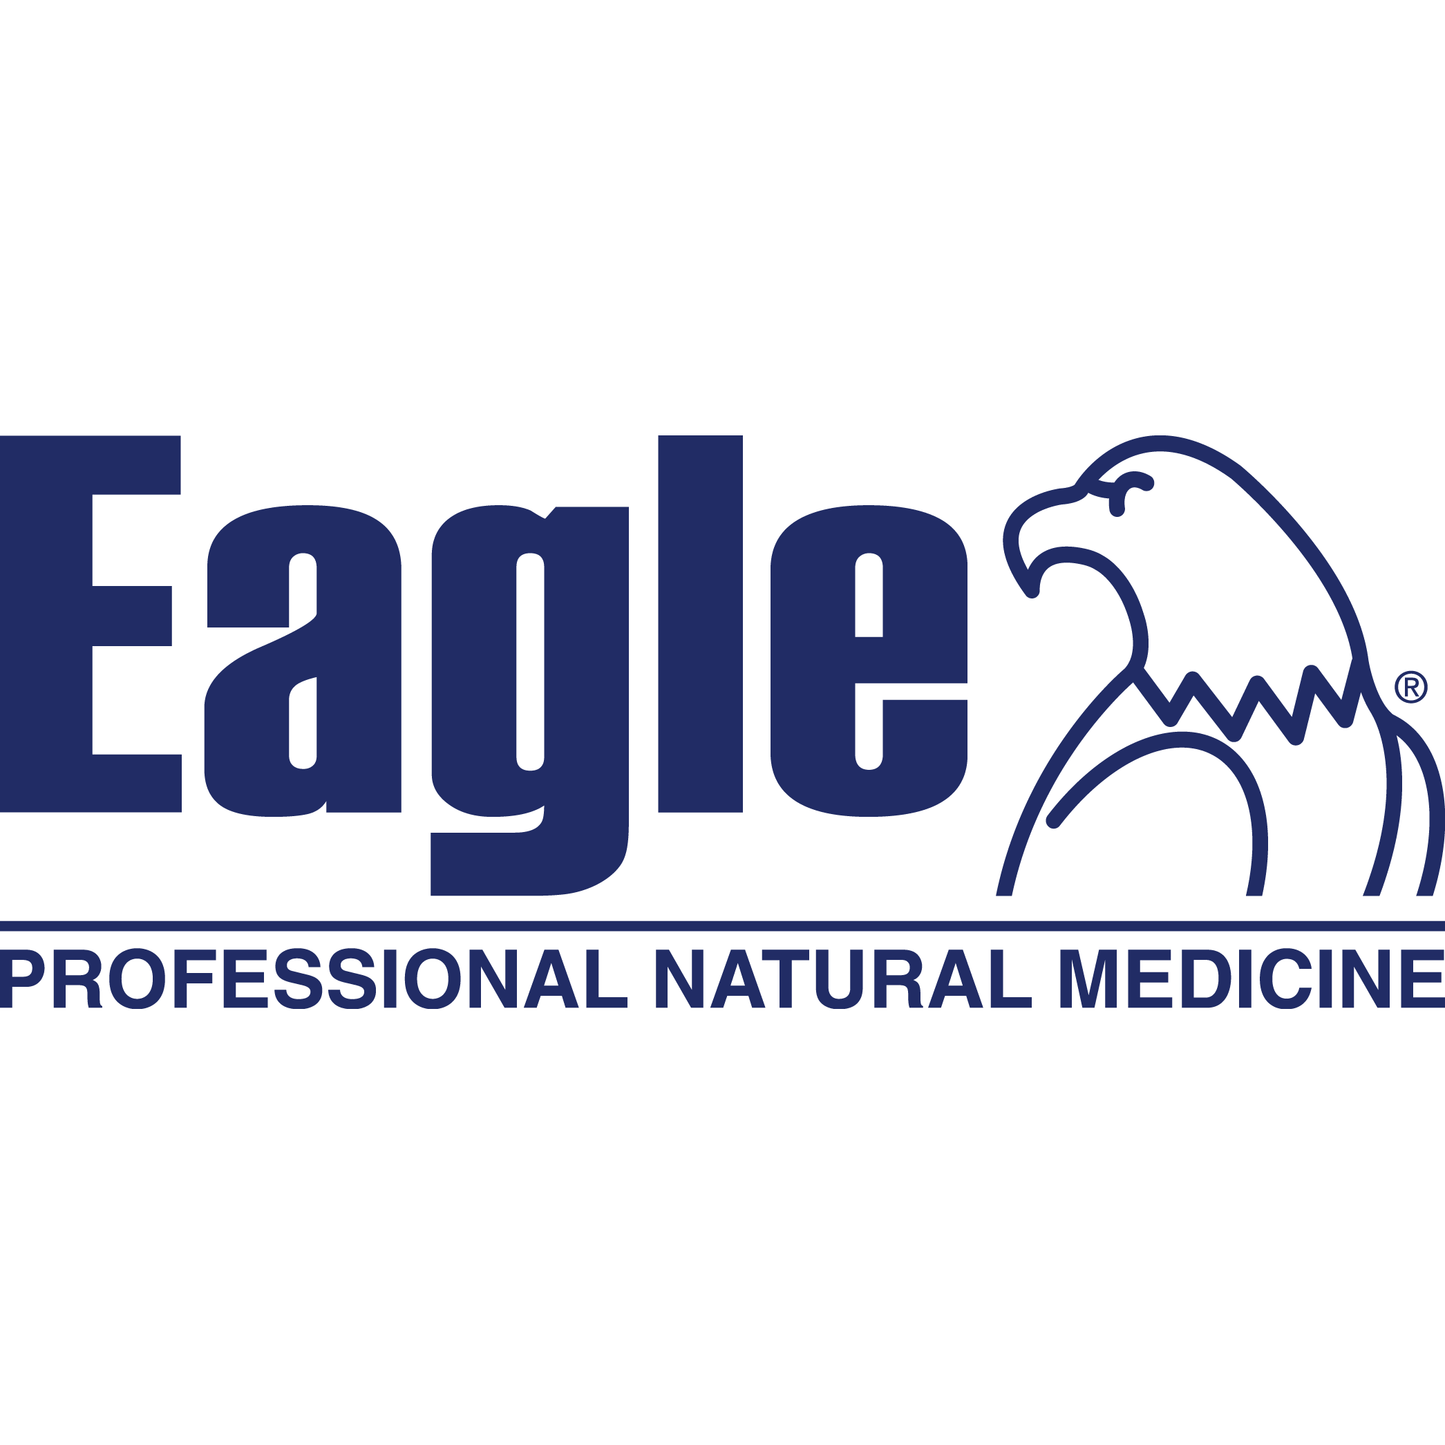 Eagle Mag-Oro 120 Tablets